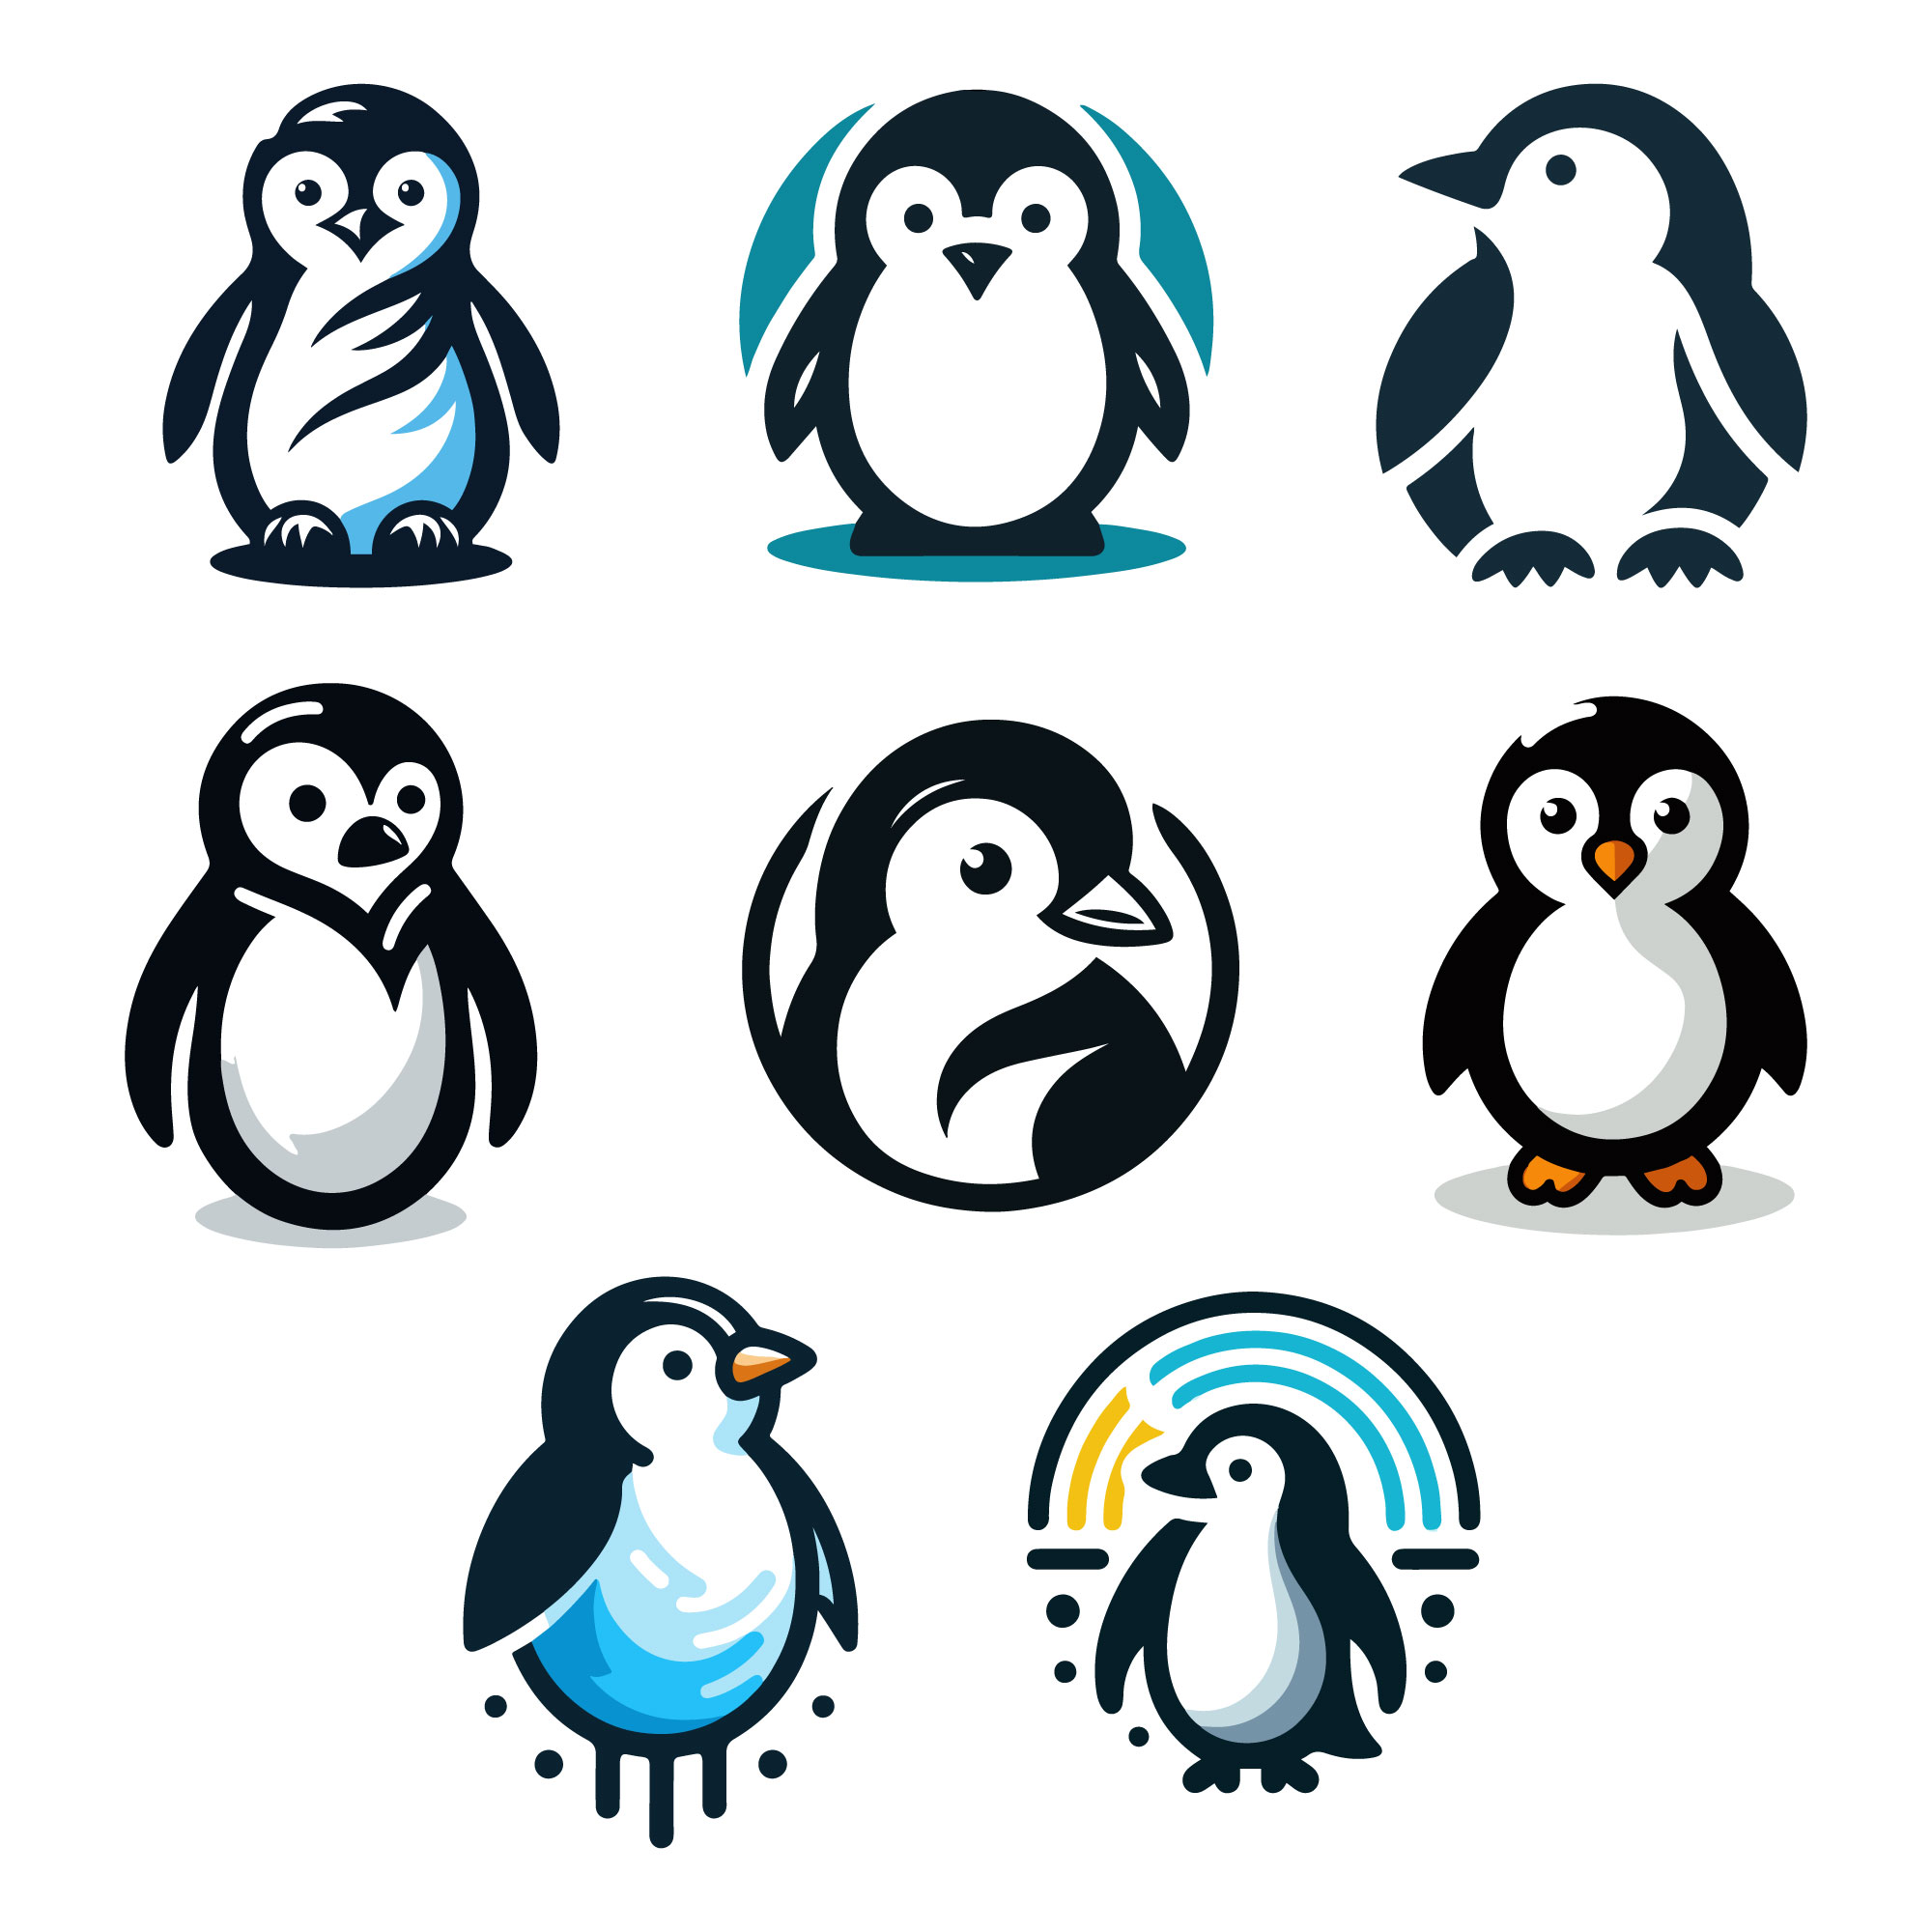 8 Penguin logos Vector Illustration cover image.